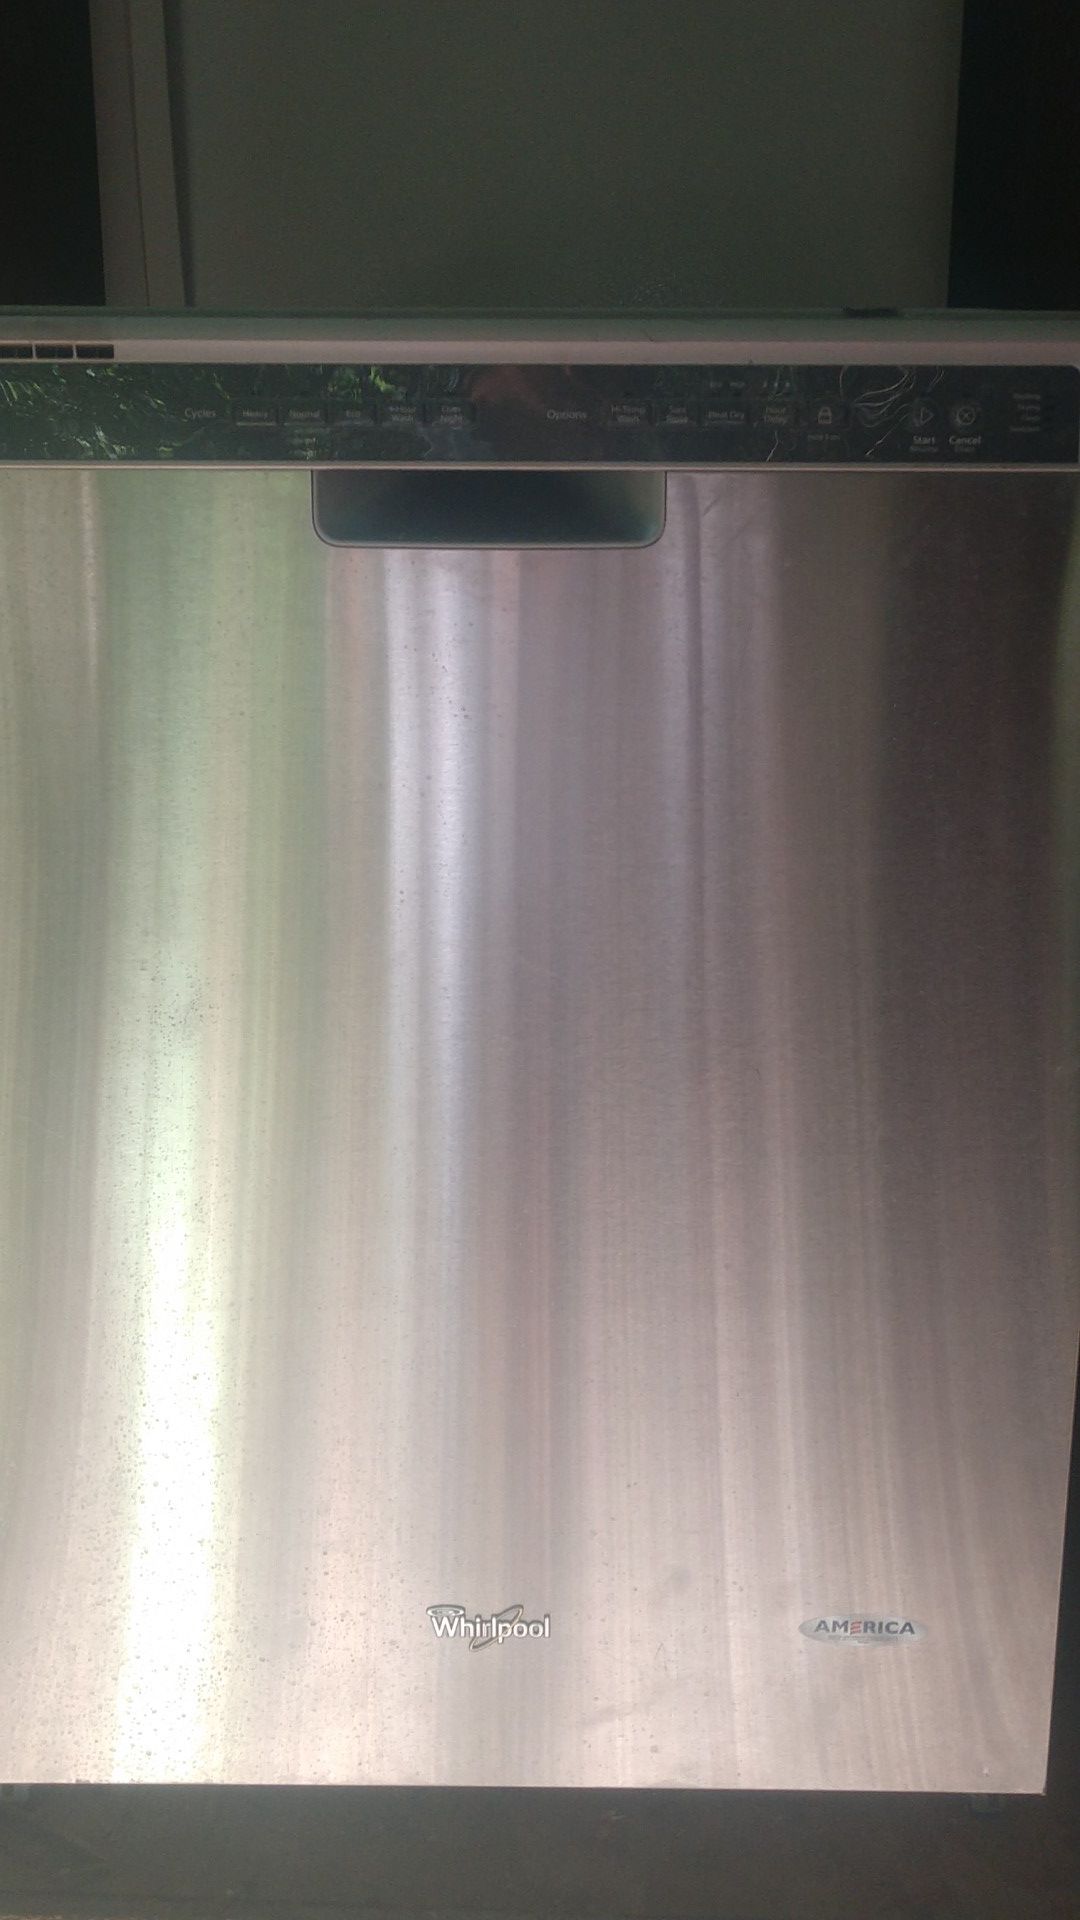 Stainless steel dishwasher